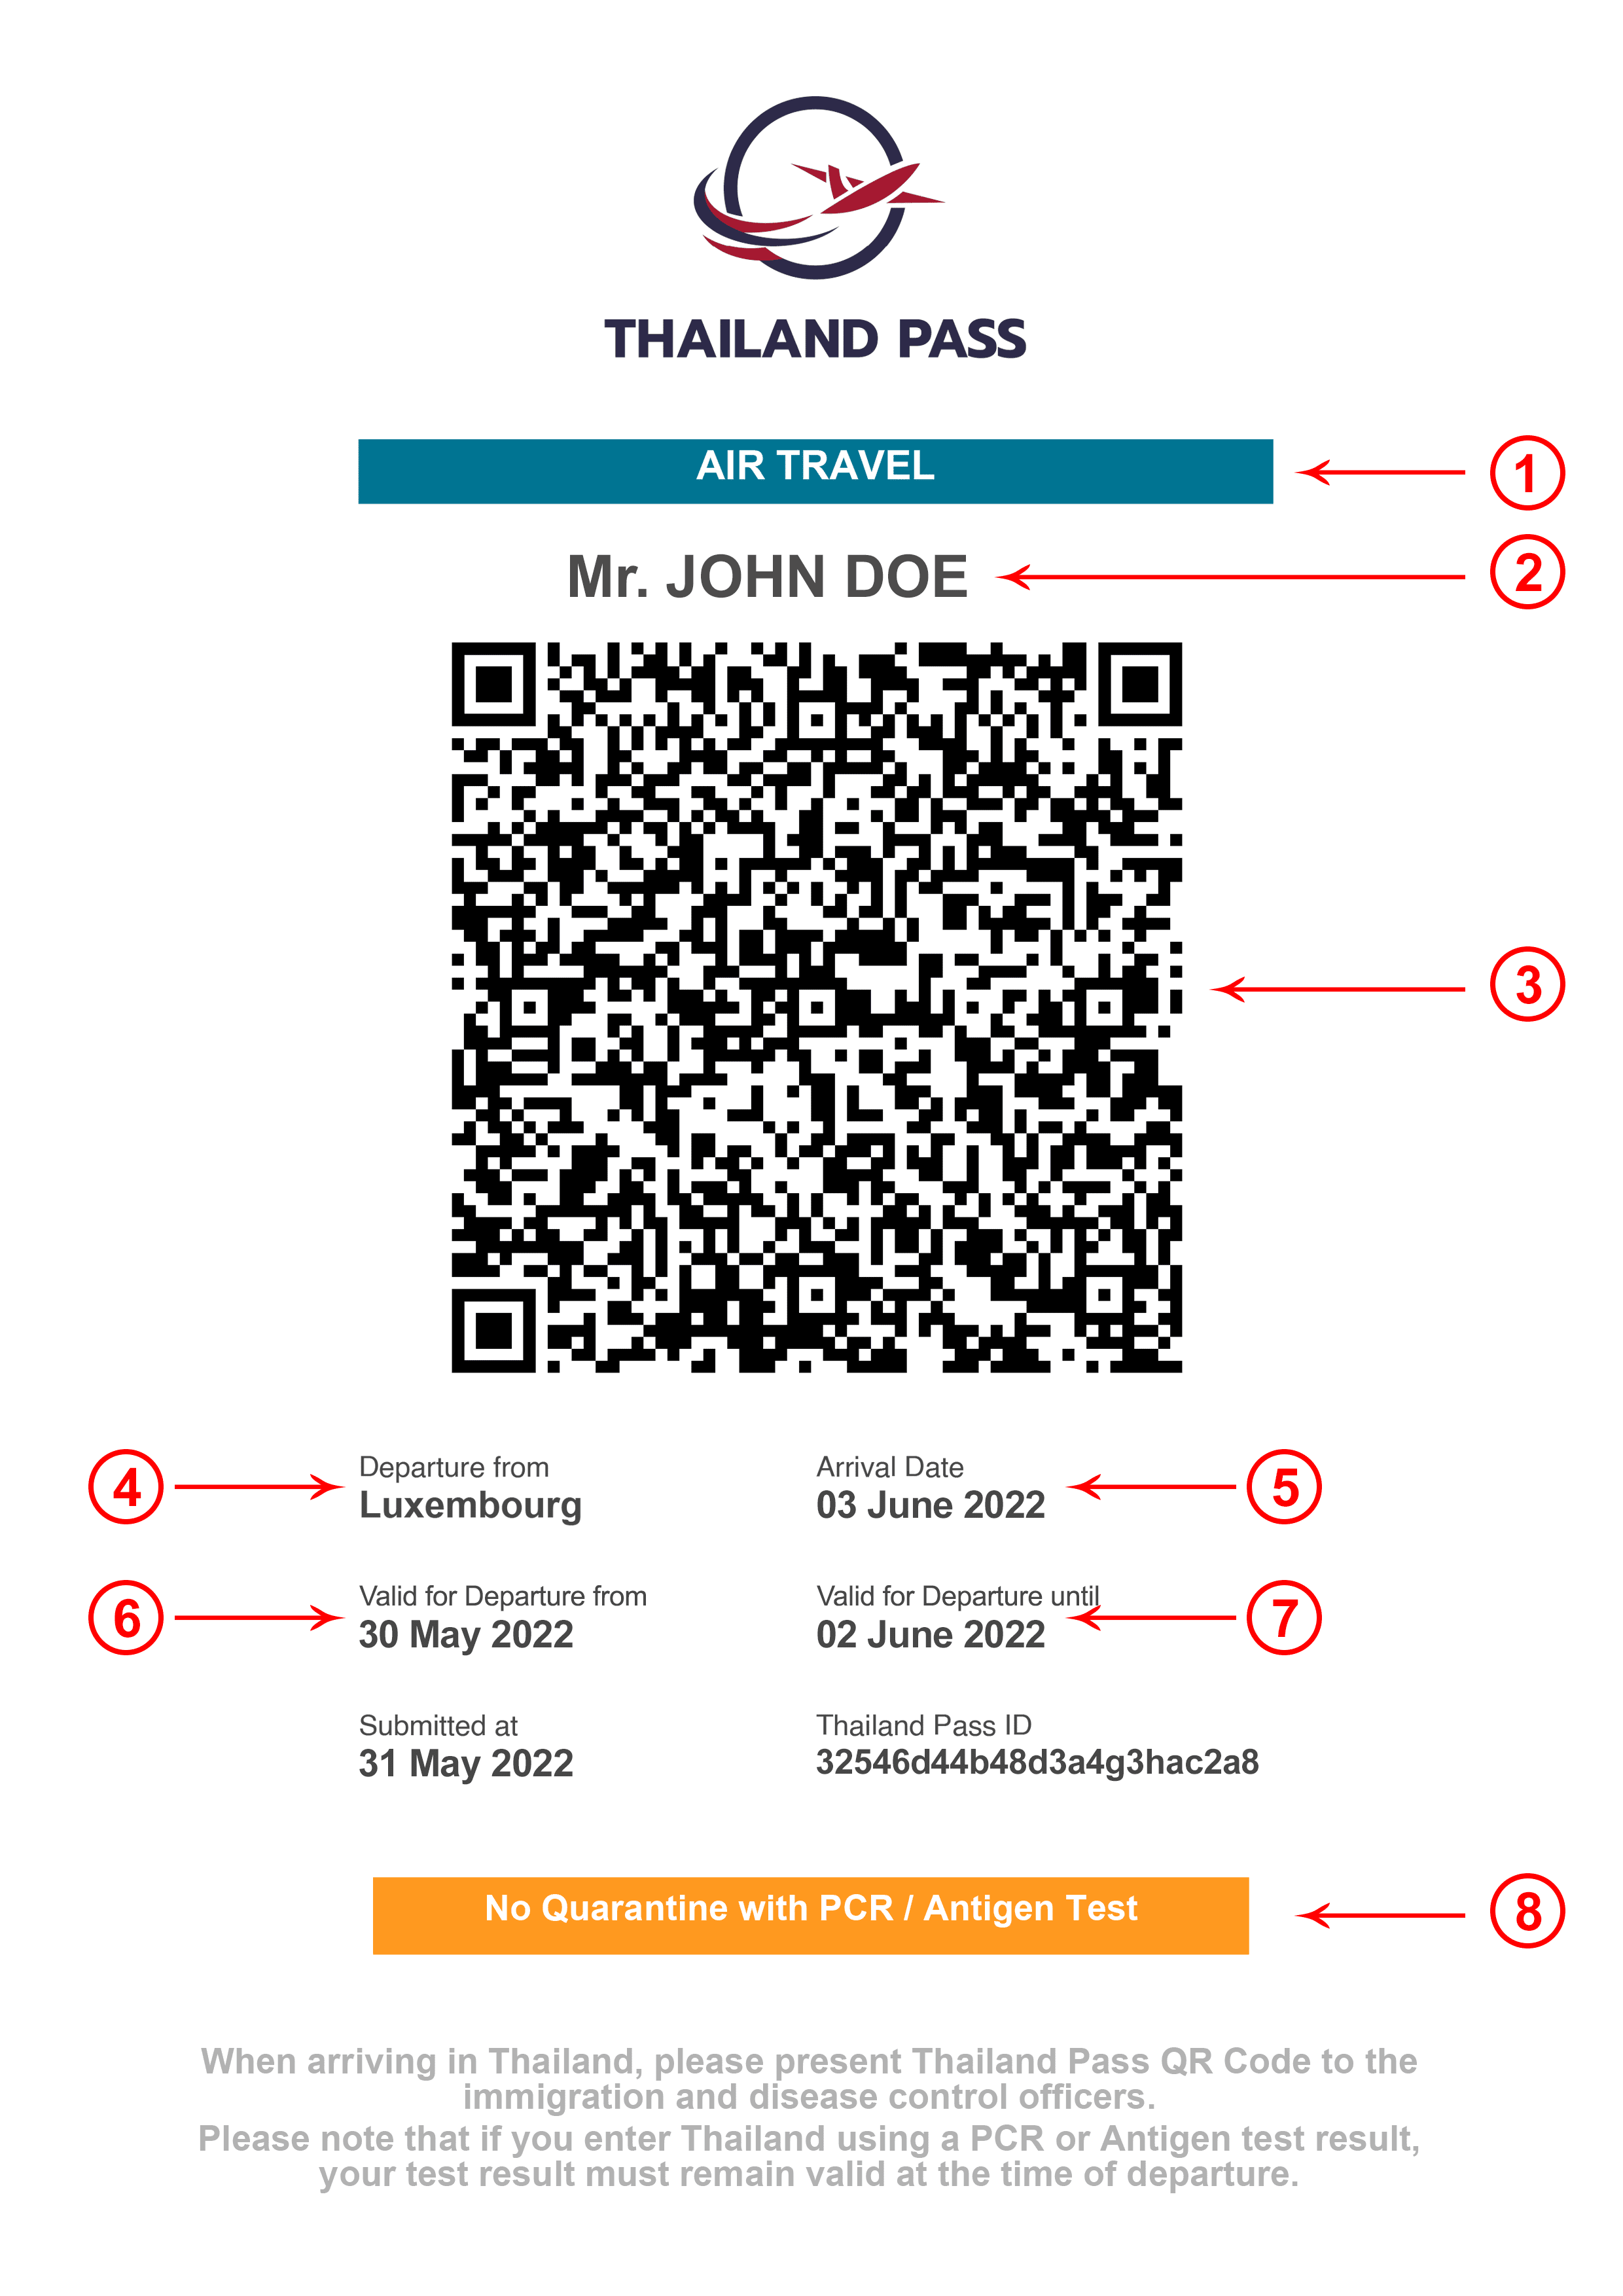 Sample Thailand Pass QR code with Antigen